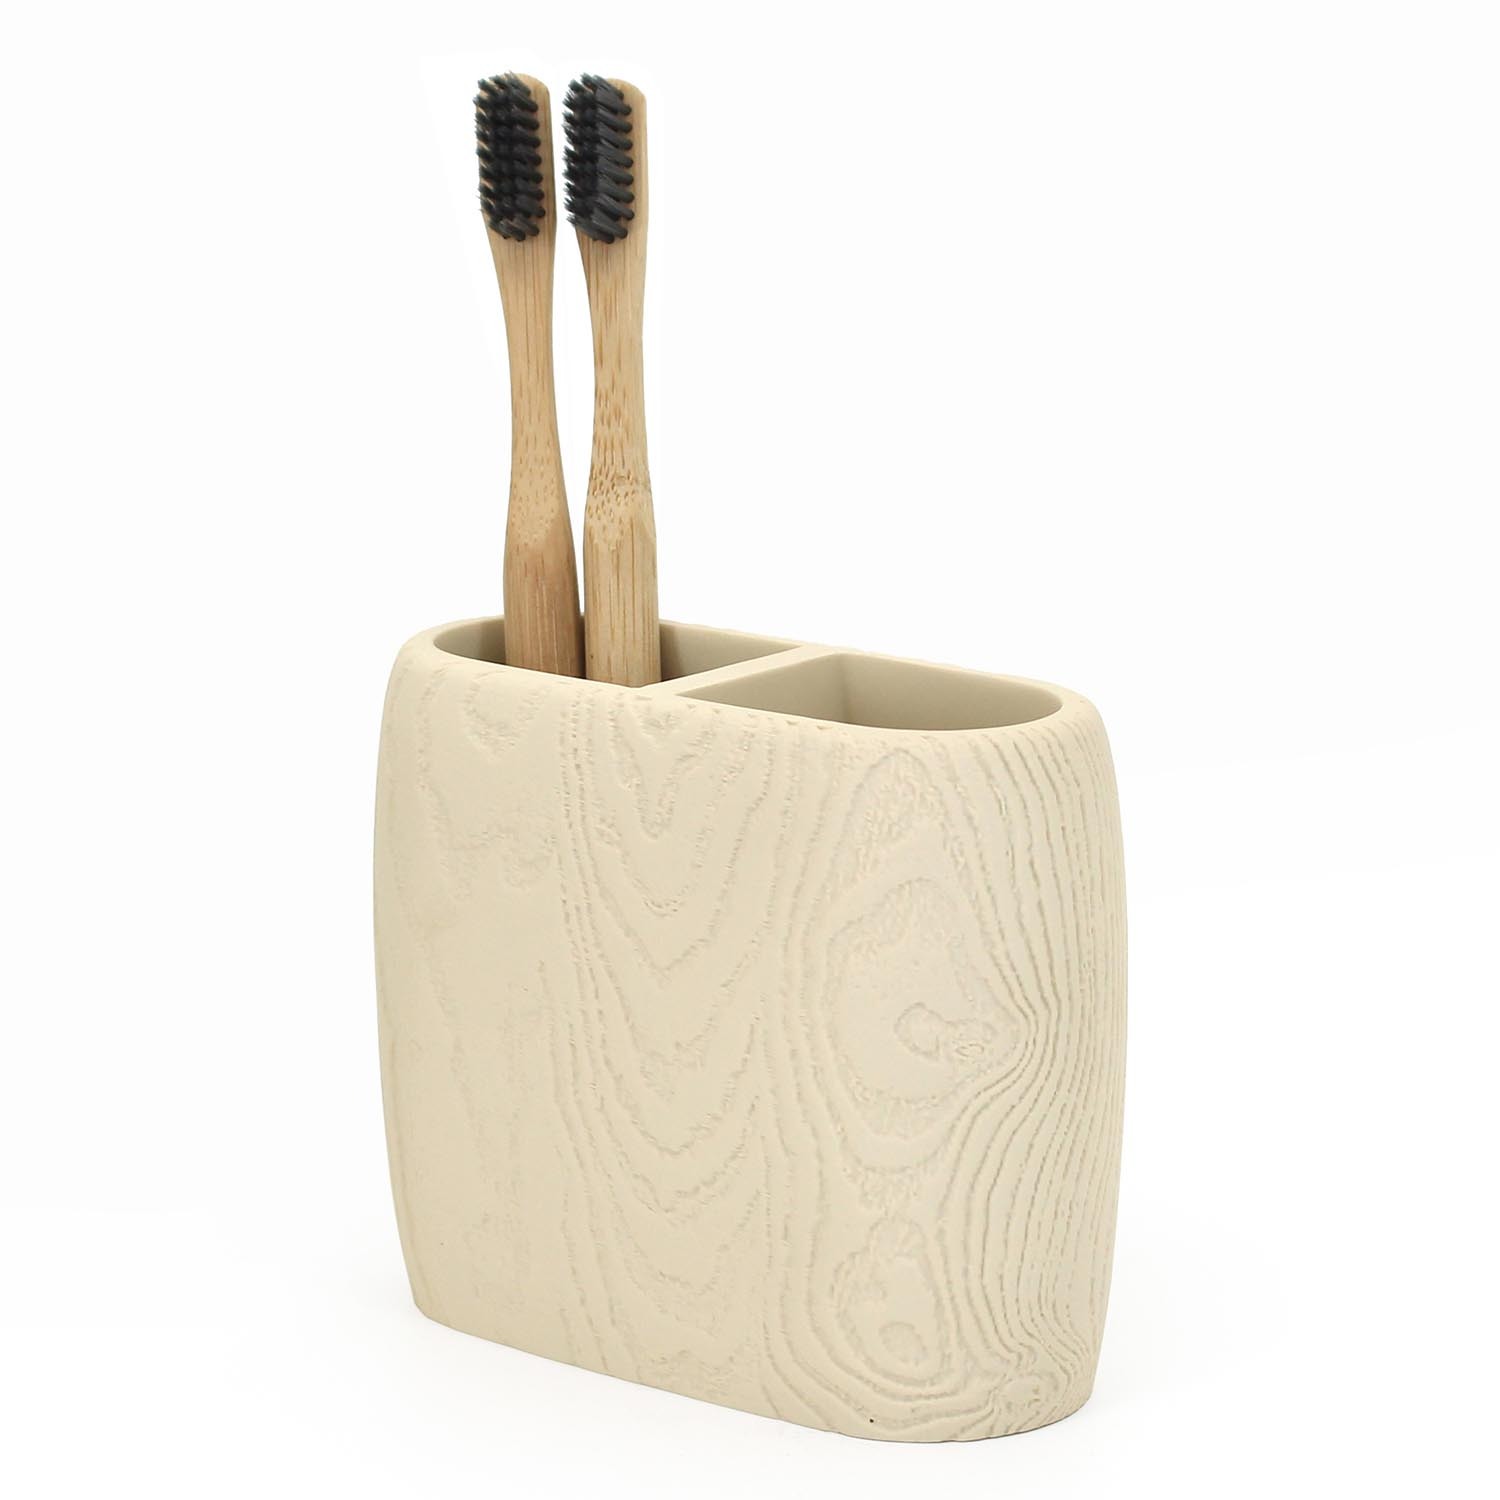 Wood Grain Toothbrush Holder - Natural